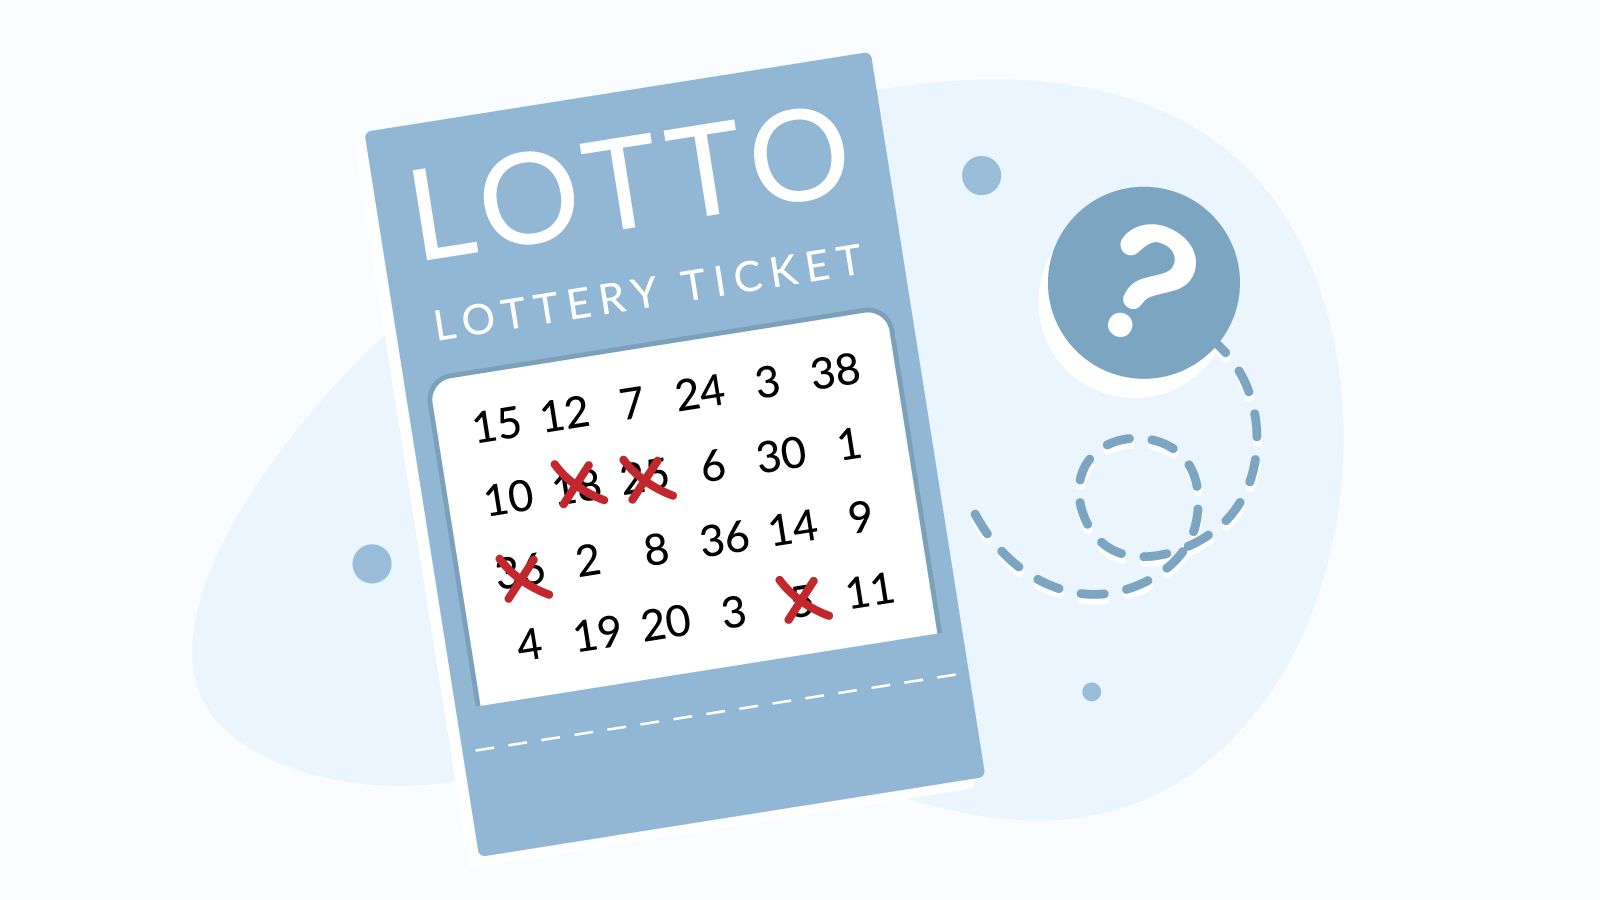 Are UK lotteries still worth it